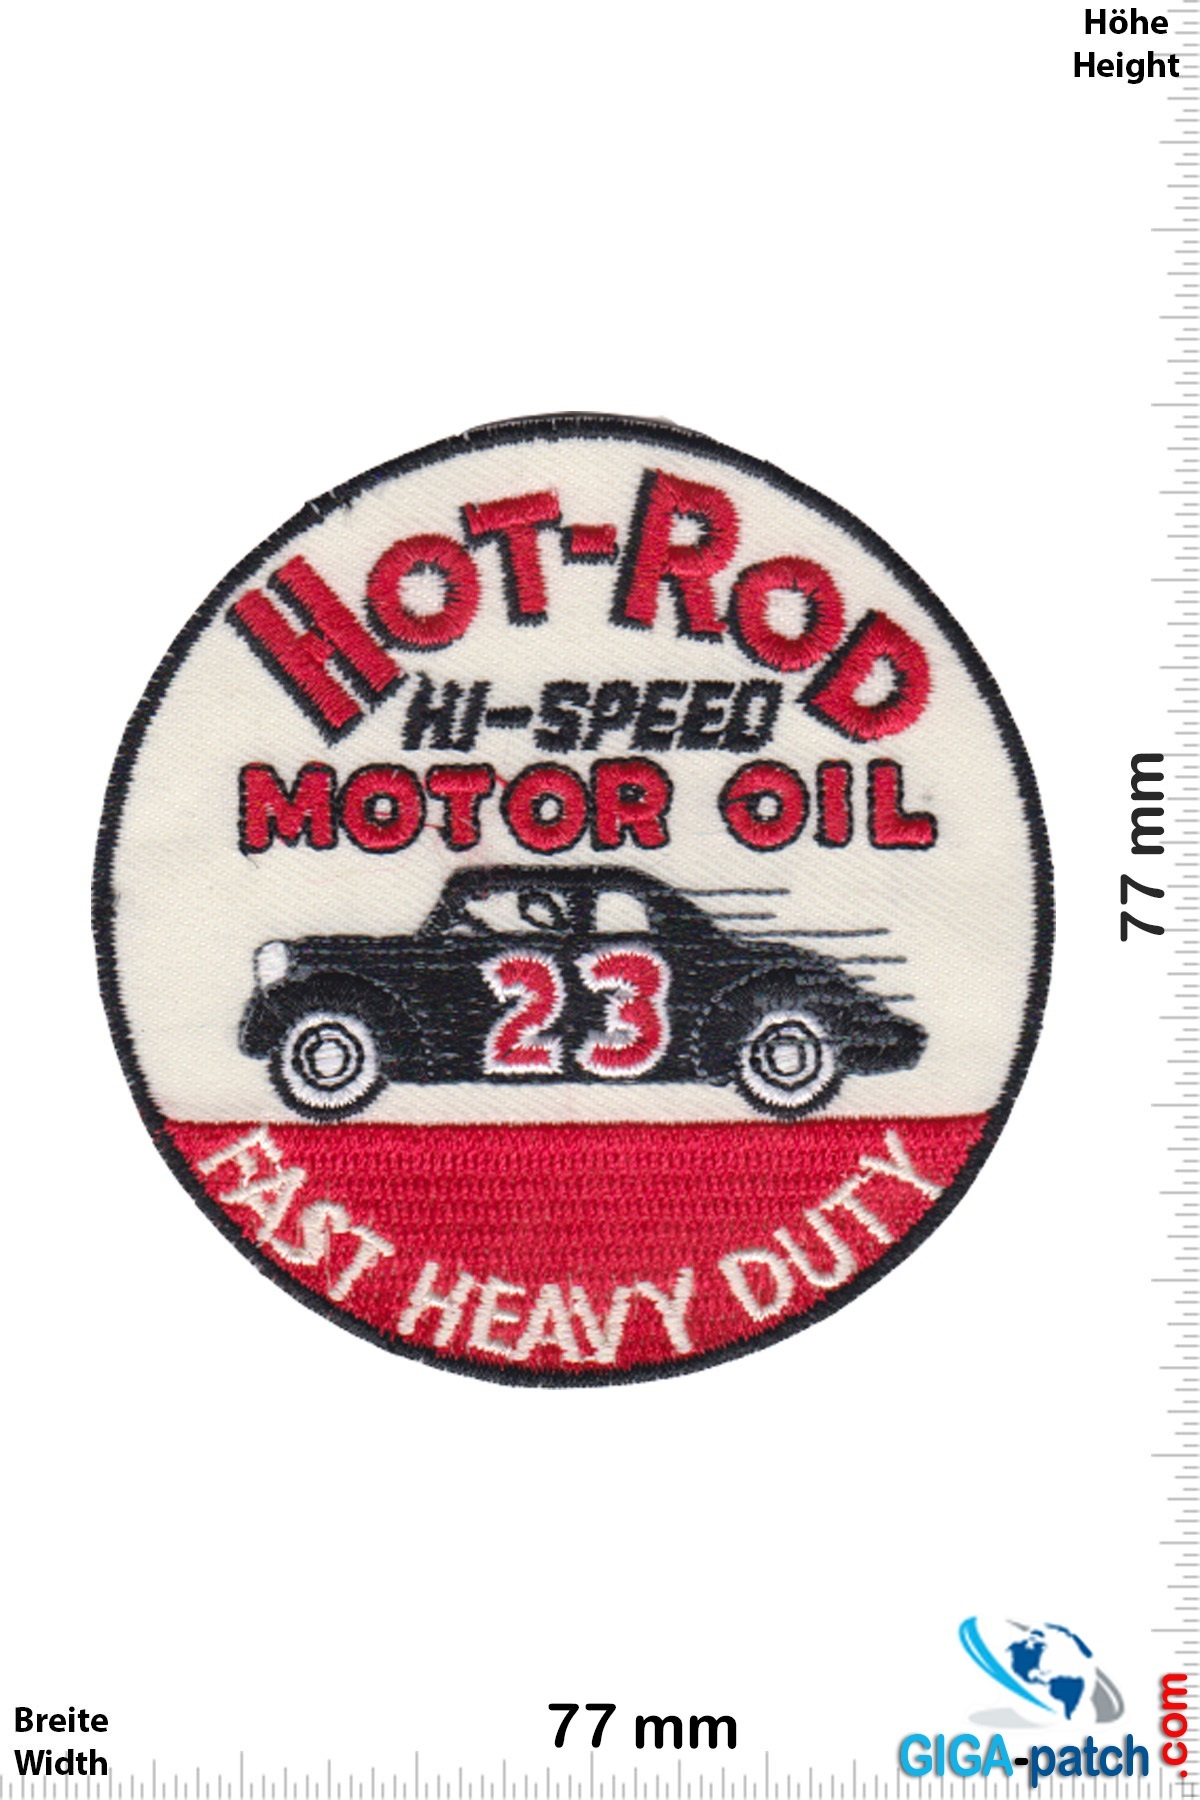 Hotrod Hot Rod - Hi-Speed Motor Oil - 23 - Fast Heavy Duty